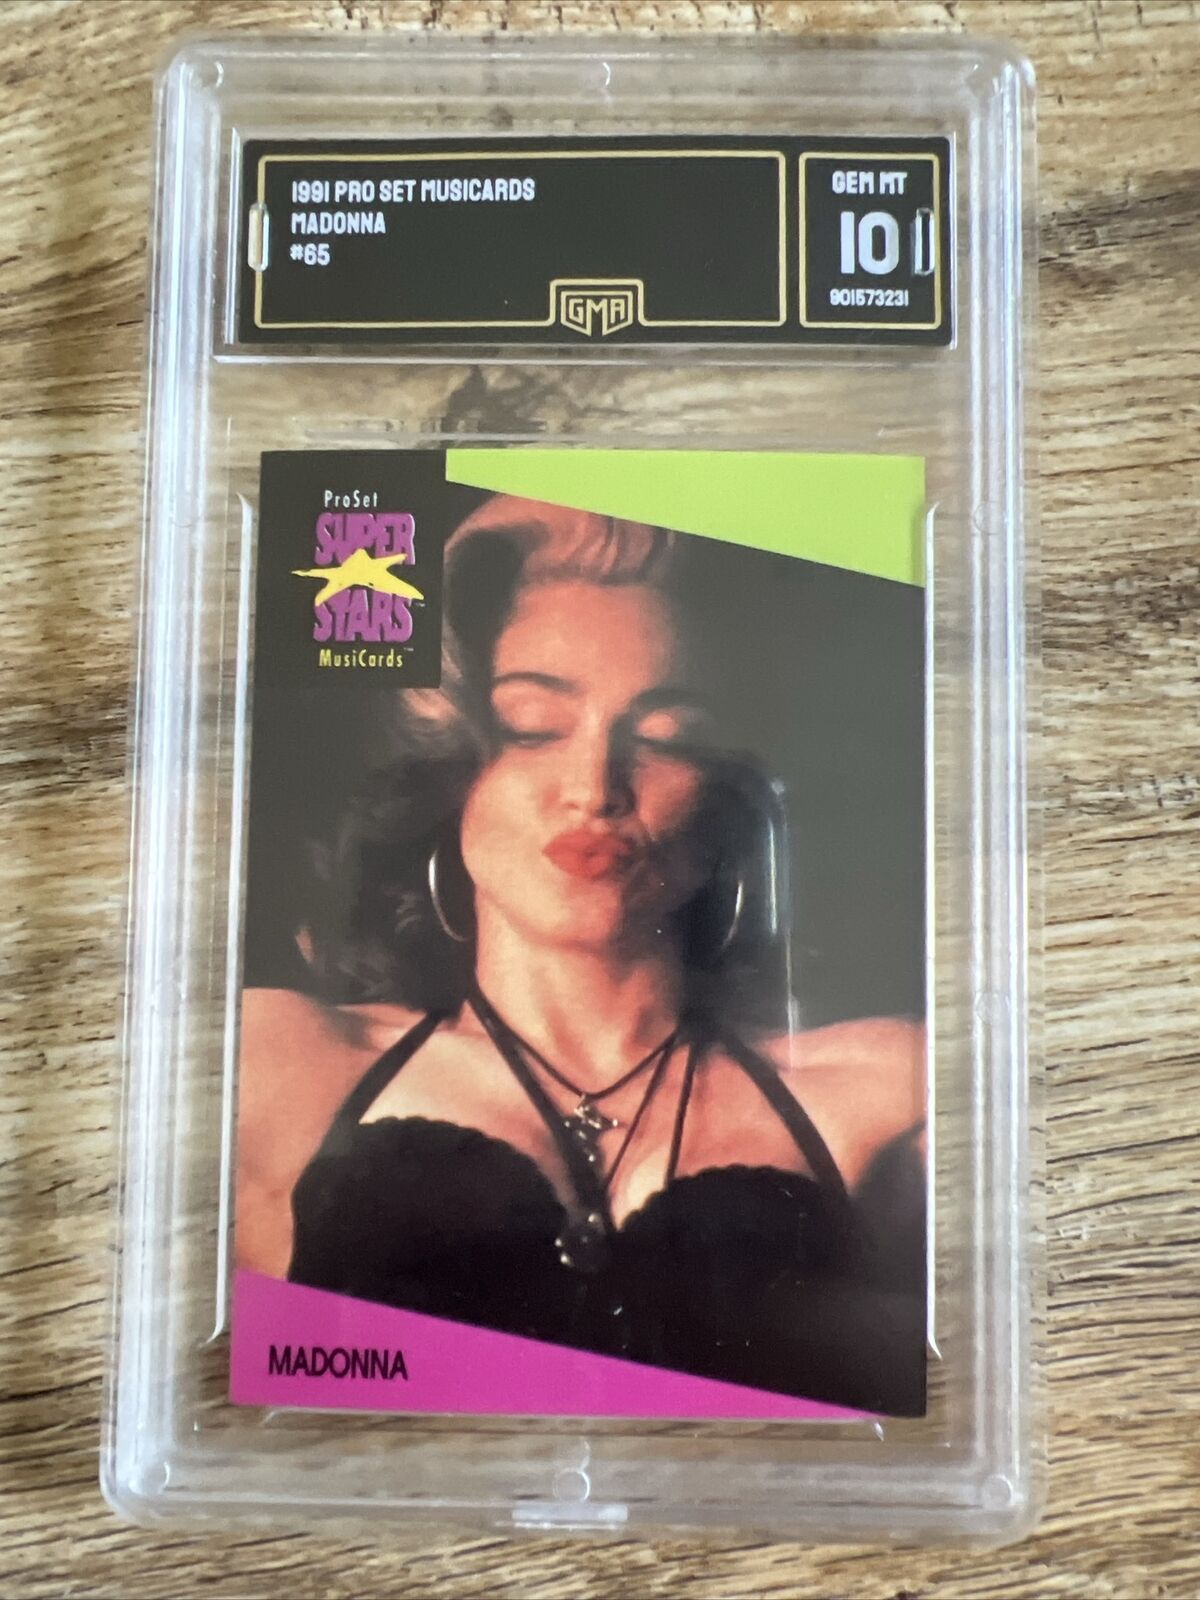 1991 Madonna Pro Set Super Stars Music Card #65 GMA 10